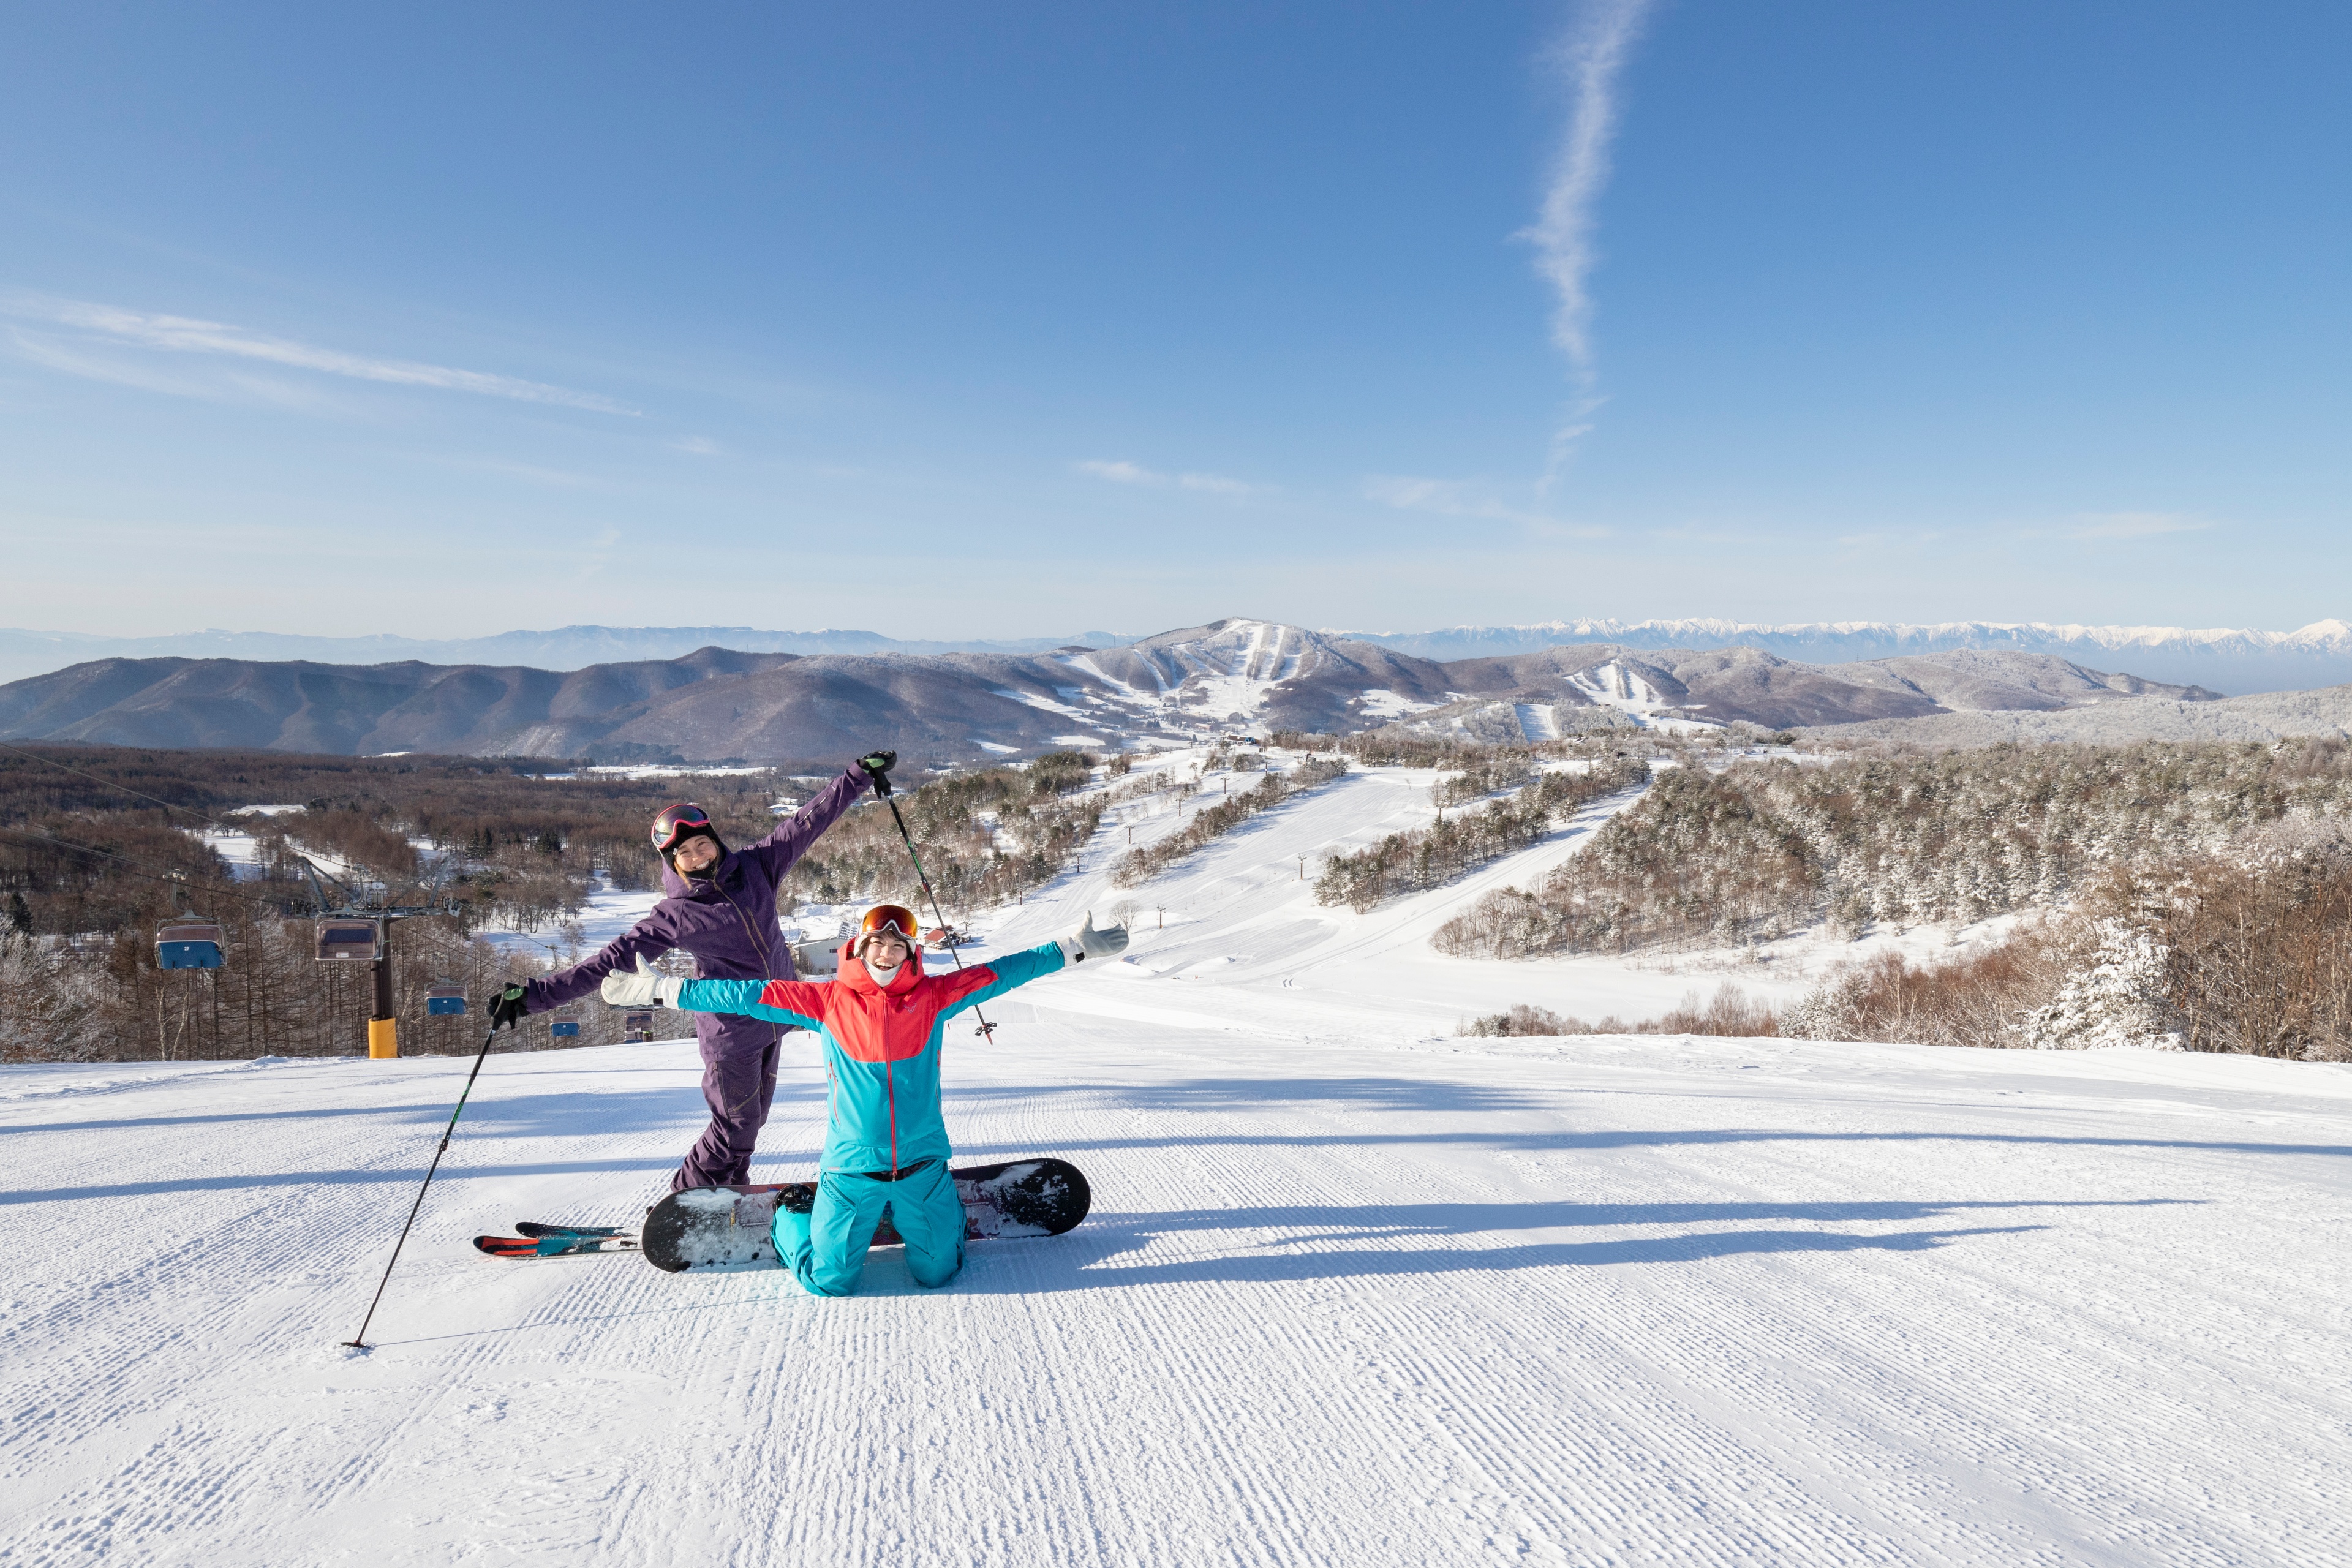 Sugadaira Kogen Snow Resort Nagano E-Voucher for Ski Lift Ticket IC Card